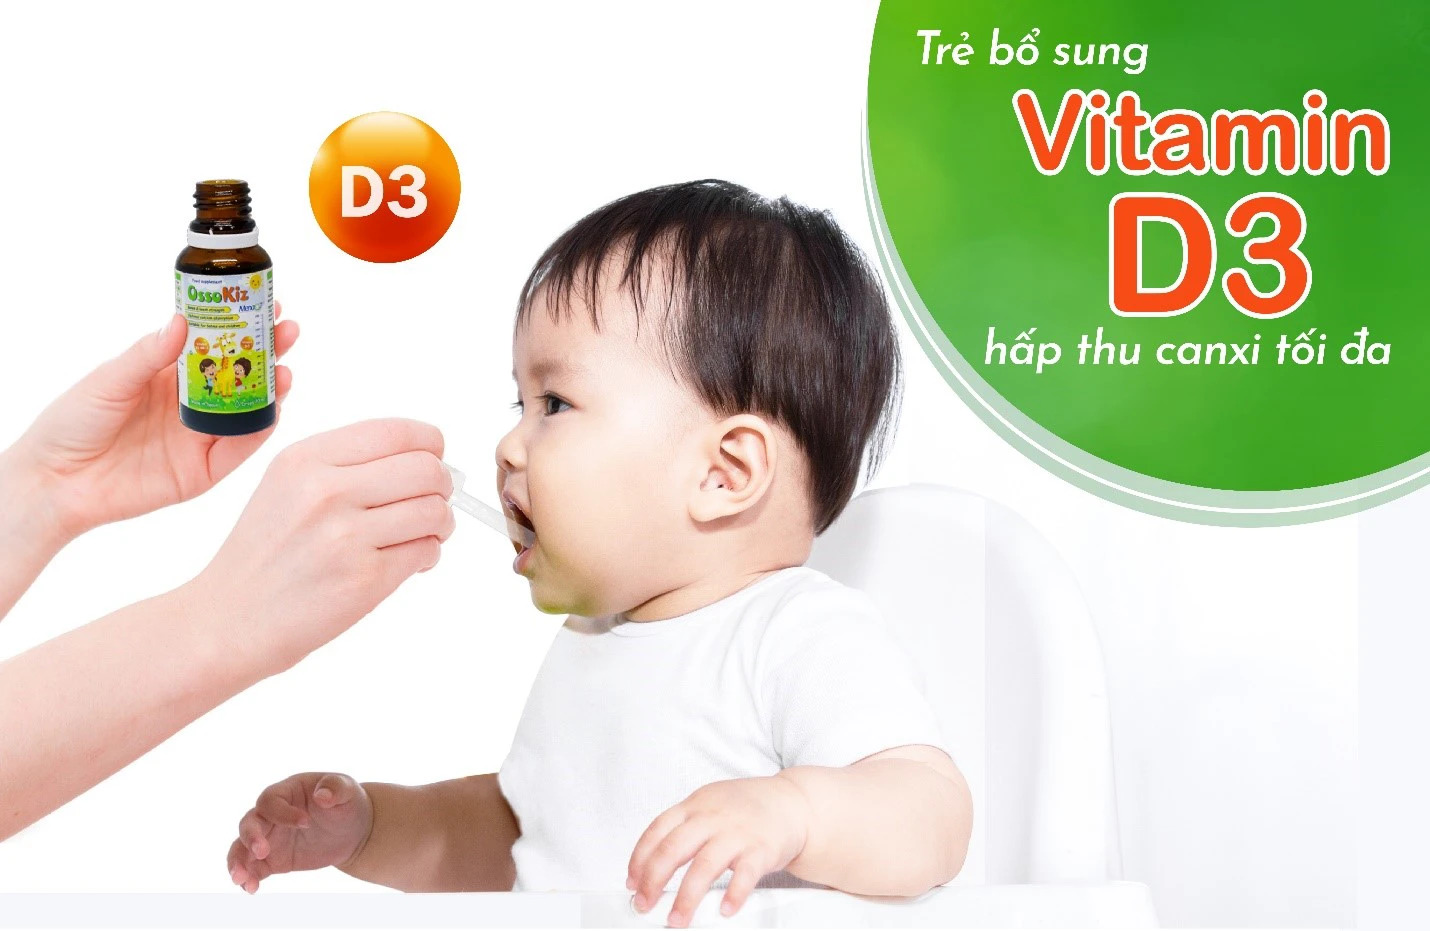 cach-dung-vitamin-osokiz-D3K2-dung-chuan-1